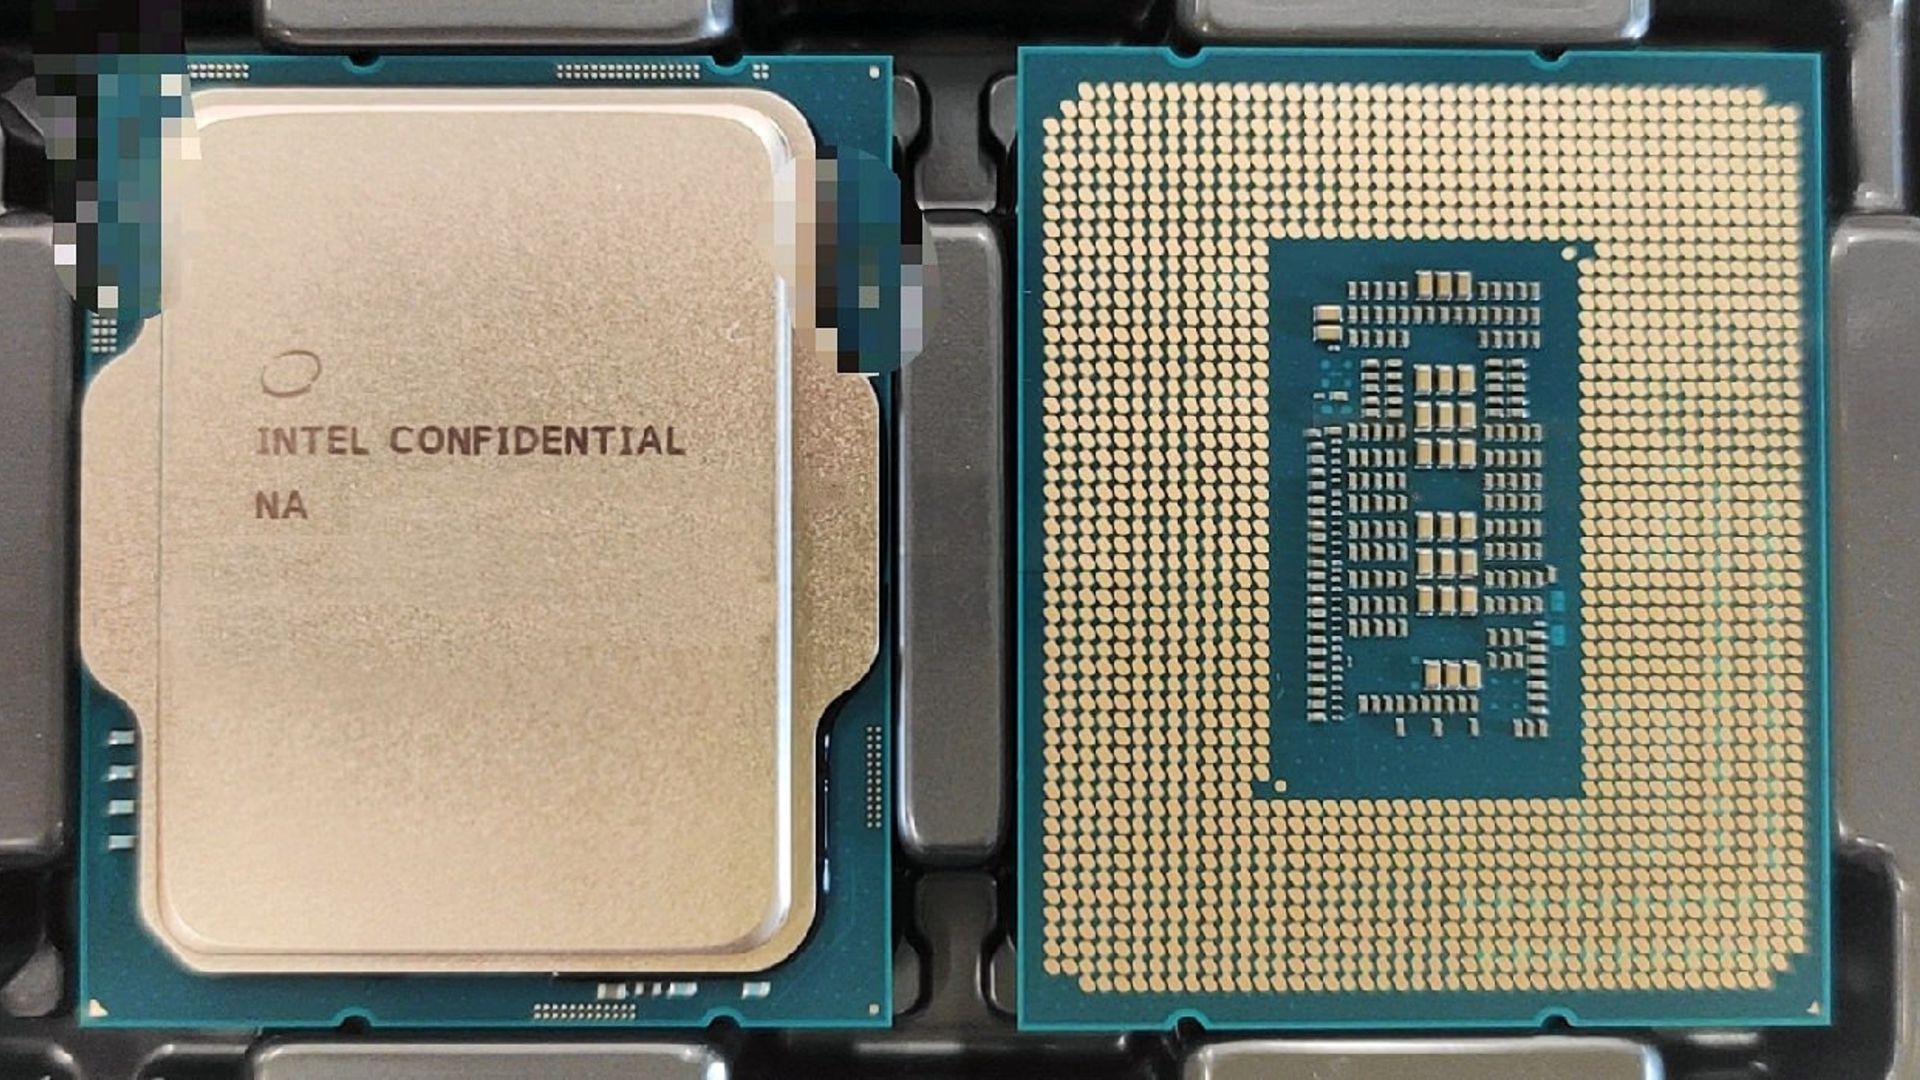 Cpu 16 cores. Intel Core i9 12900k. Процессор Intel Core i9. Процессор Intel Core i9-12900. Процессор Intel Core i7-12700k lga1700.